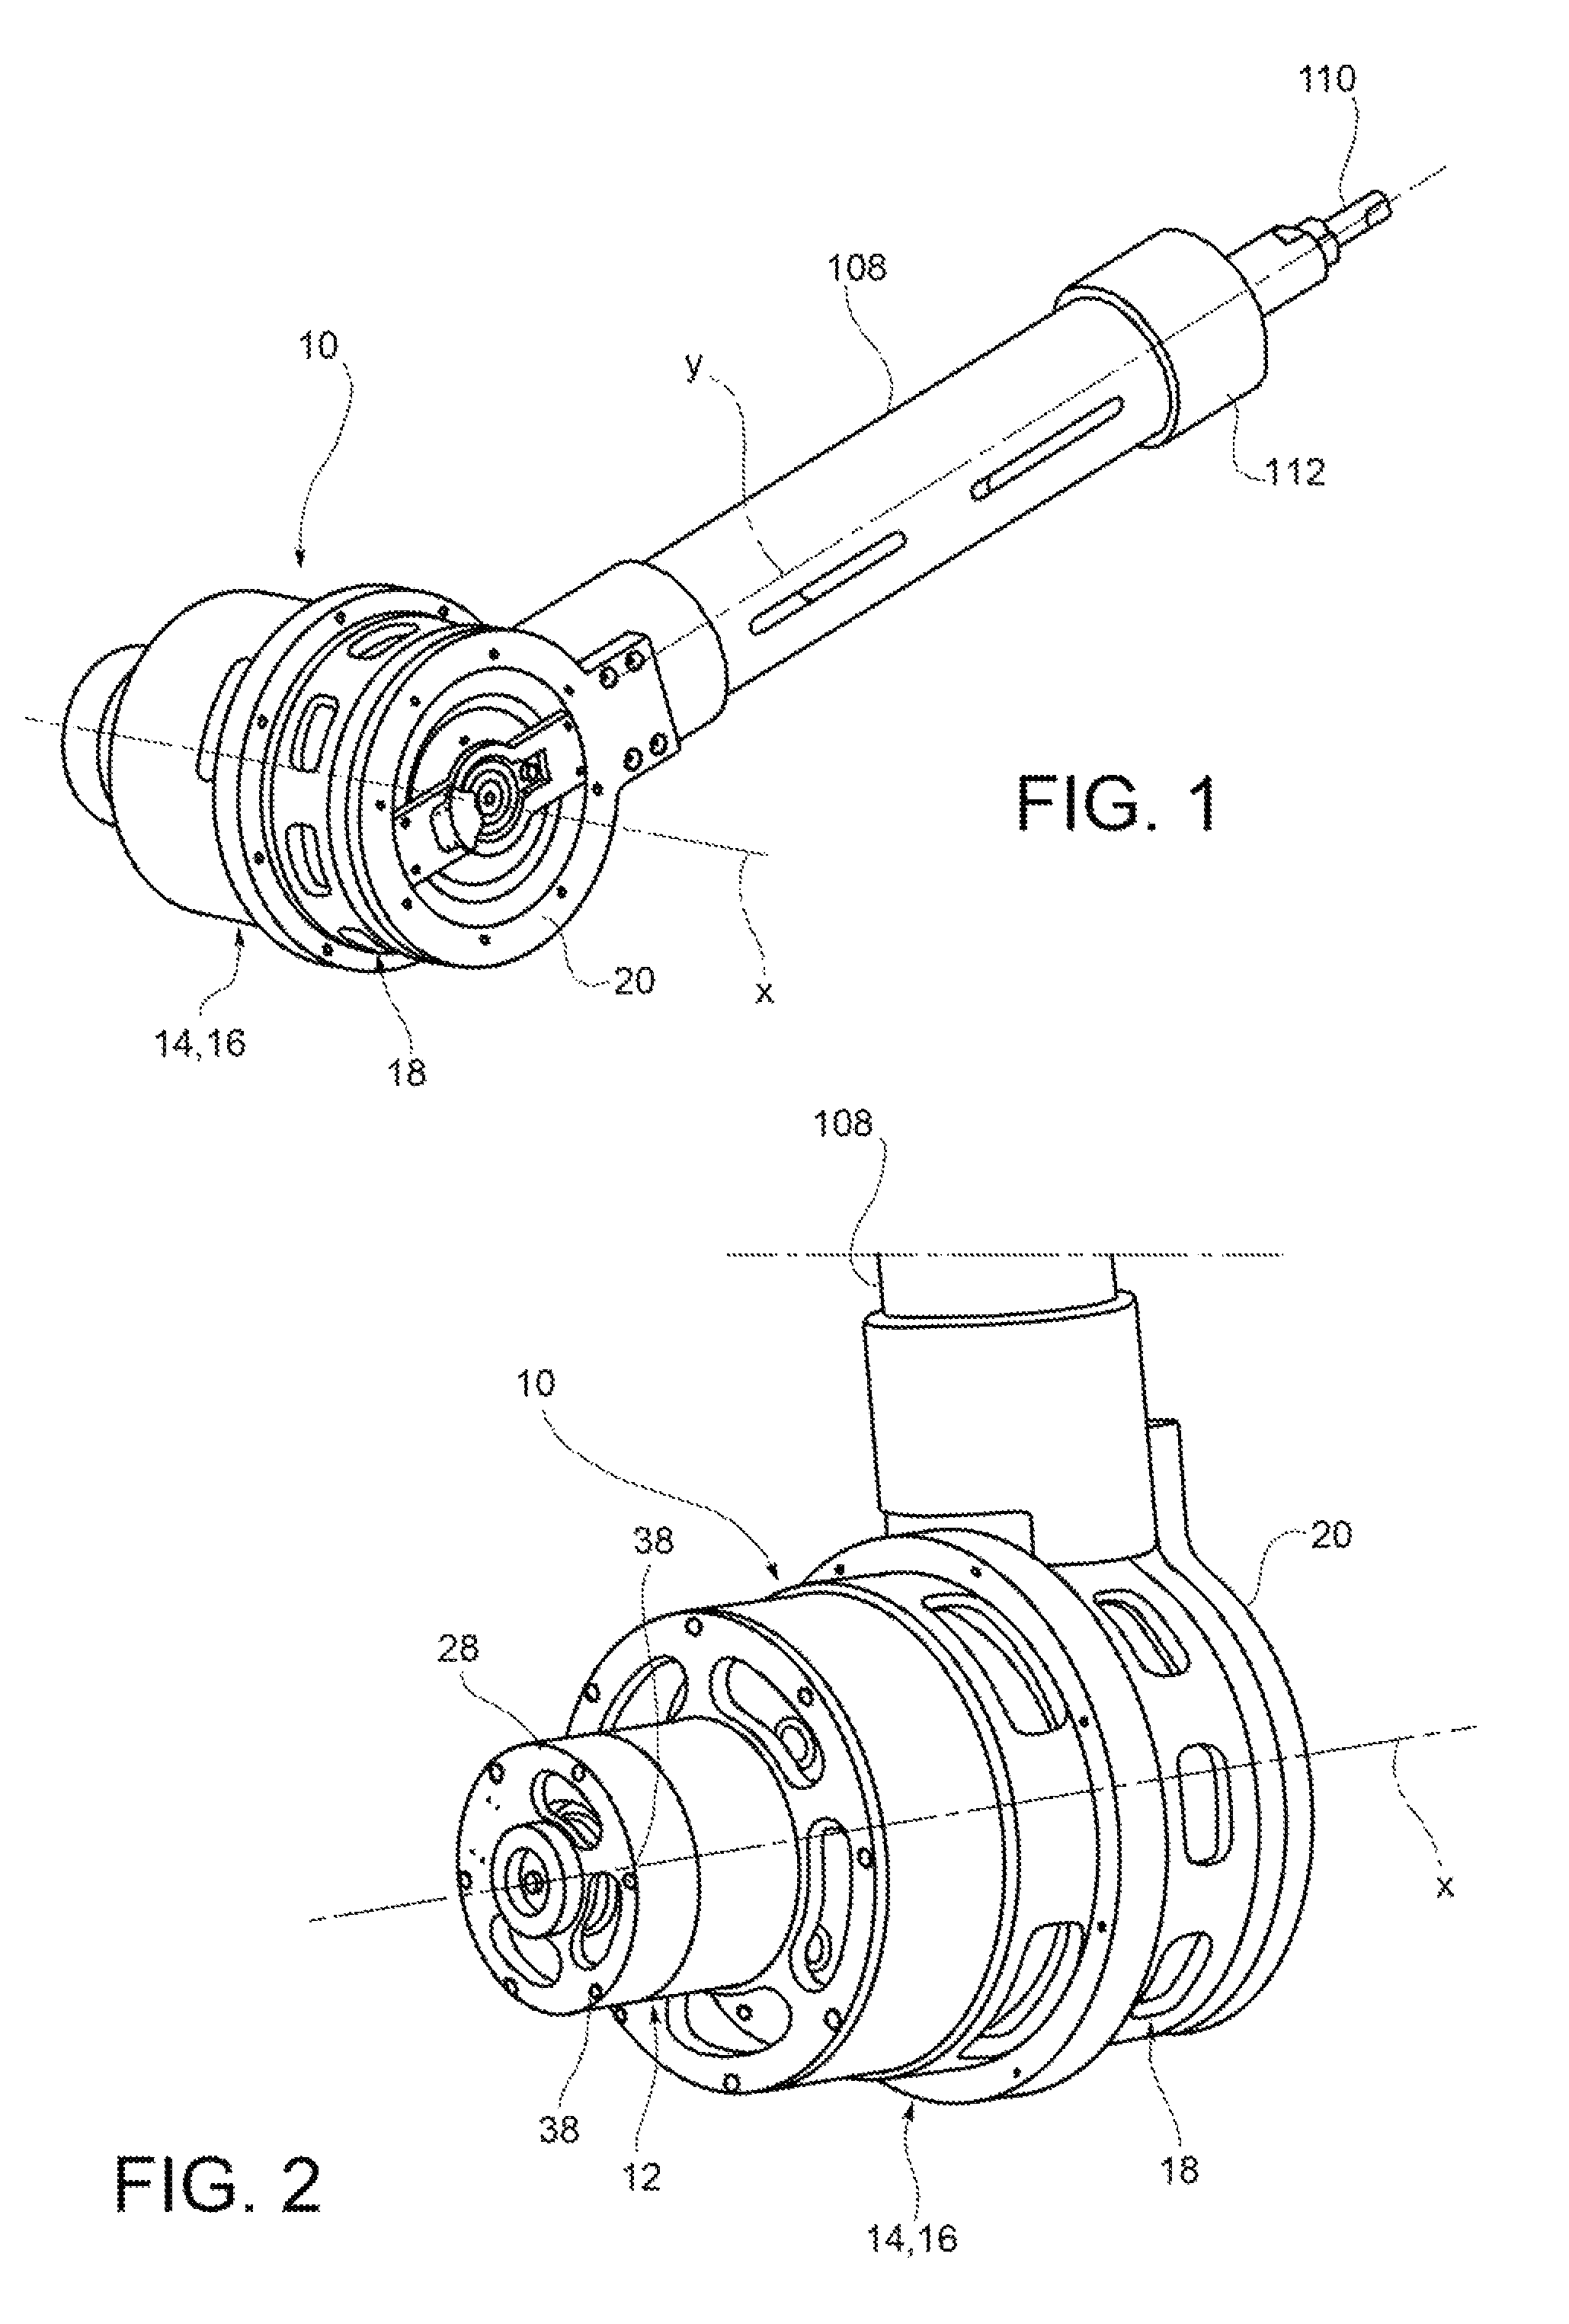 Elastic rotary actuator